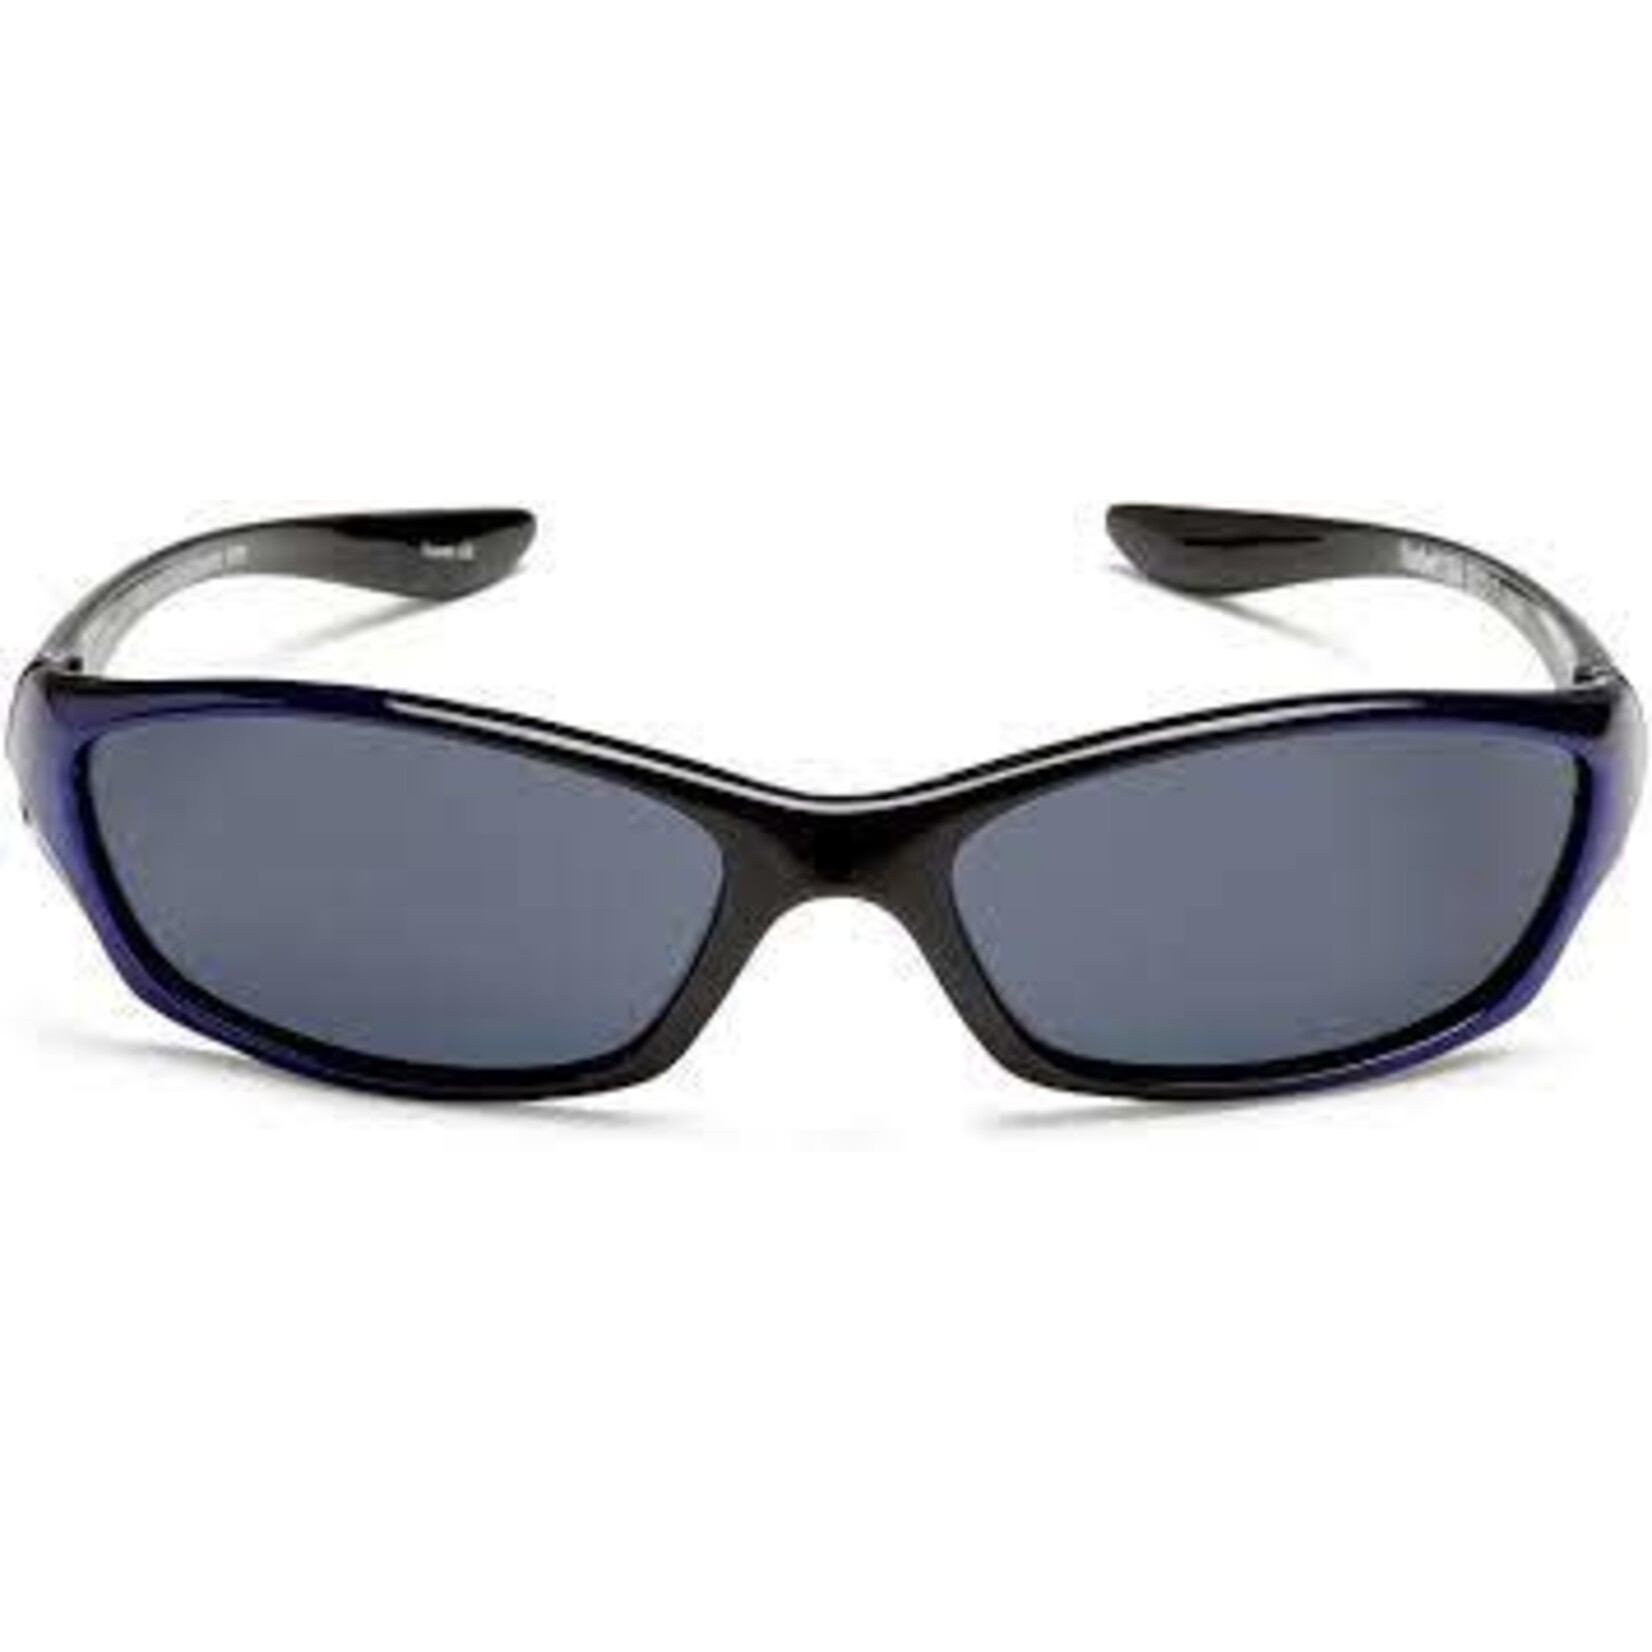 DM Merchandise Velocity Children's Sunglasses